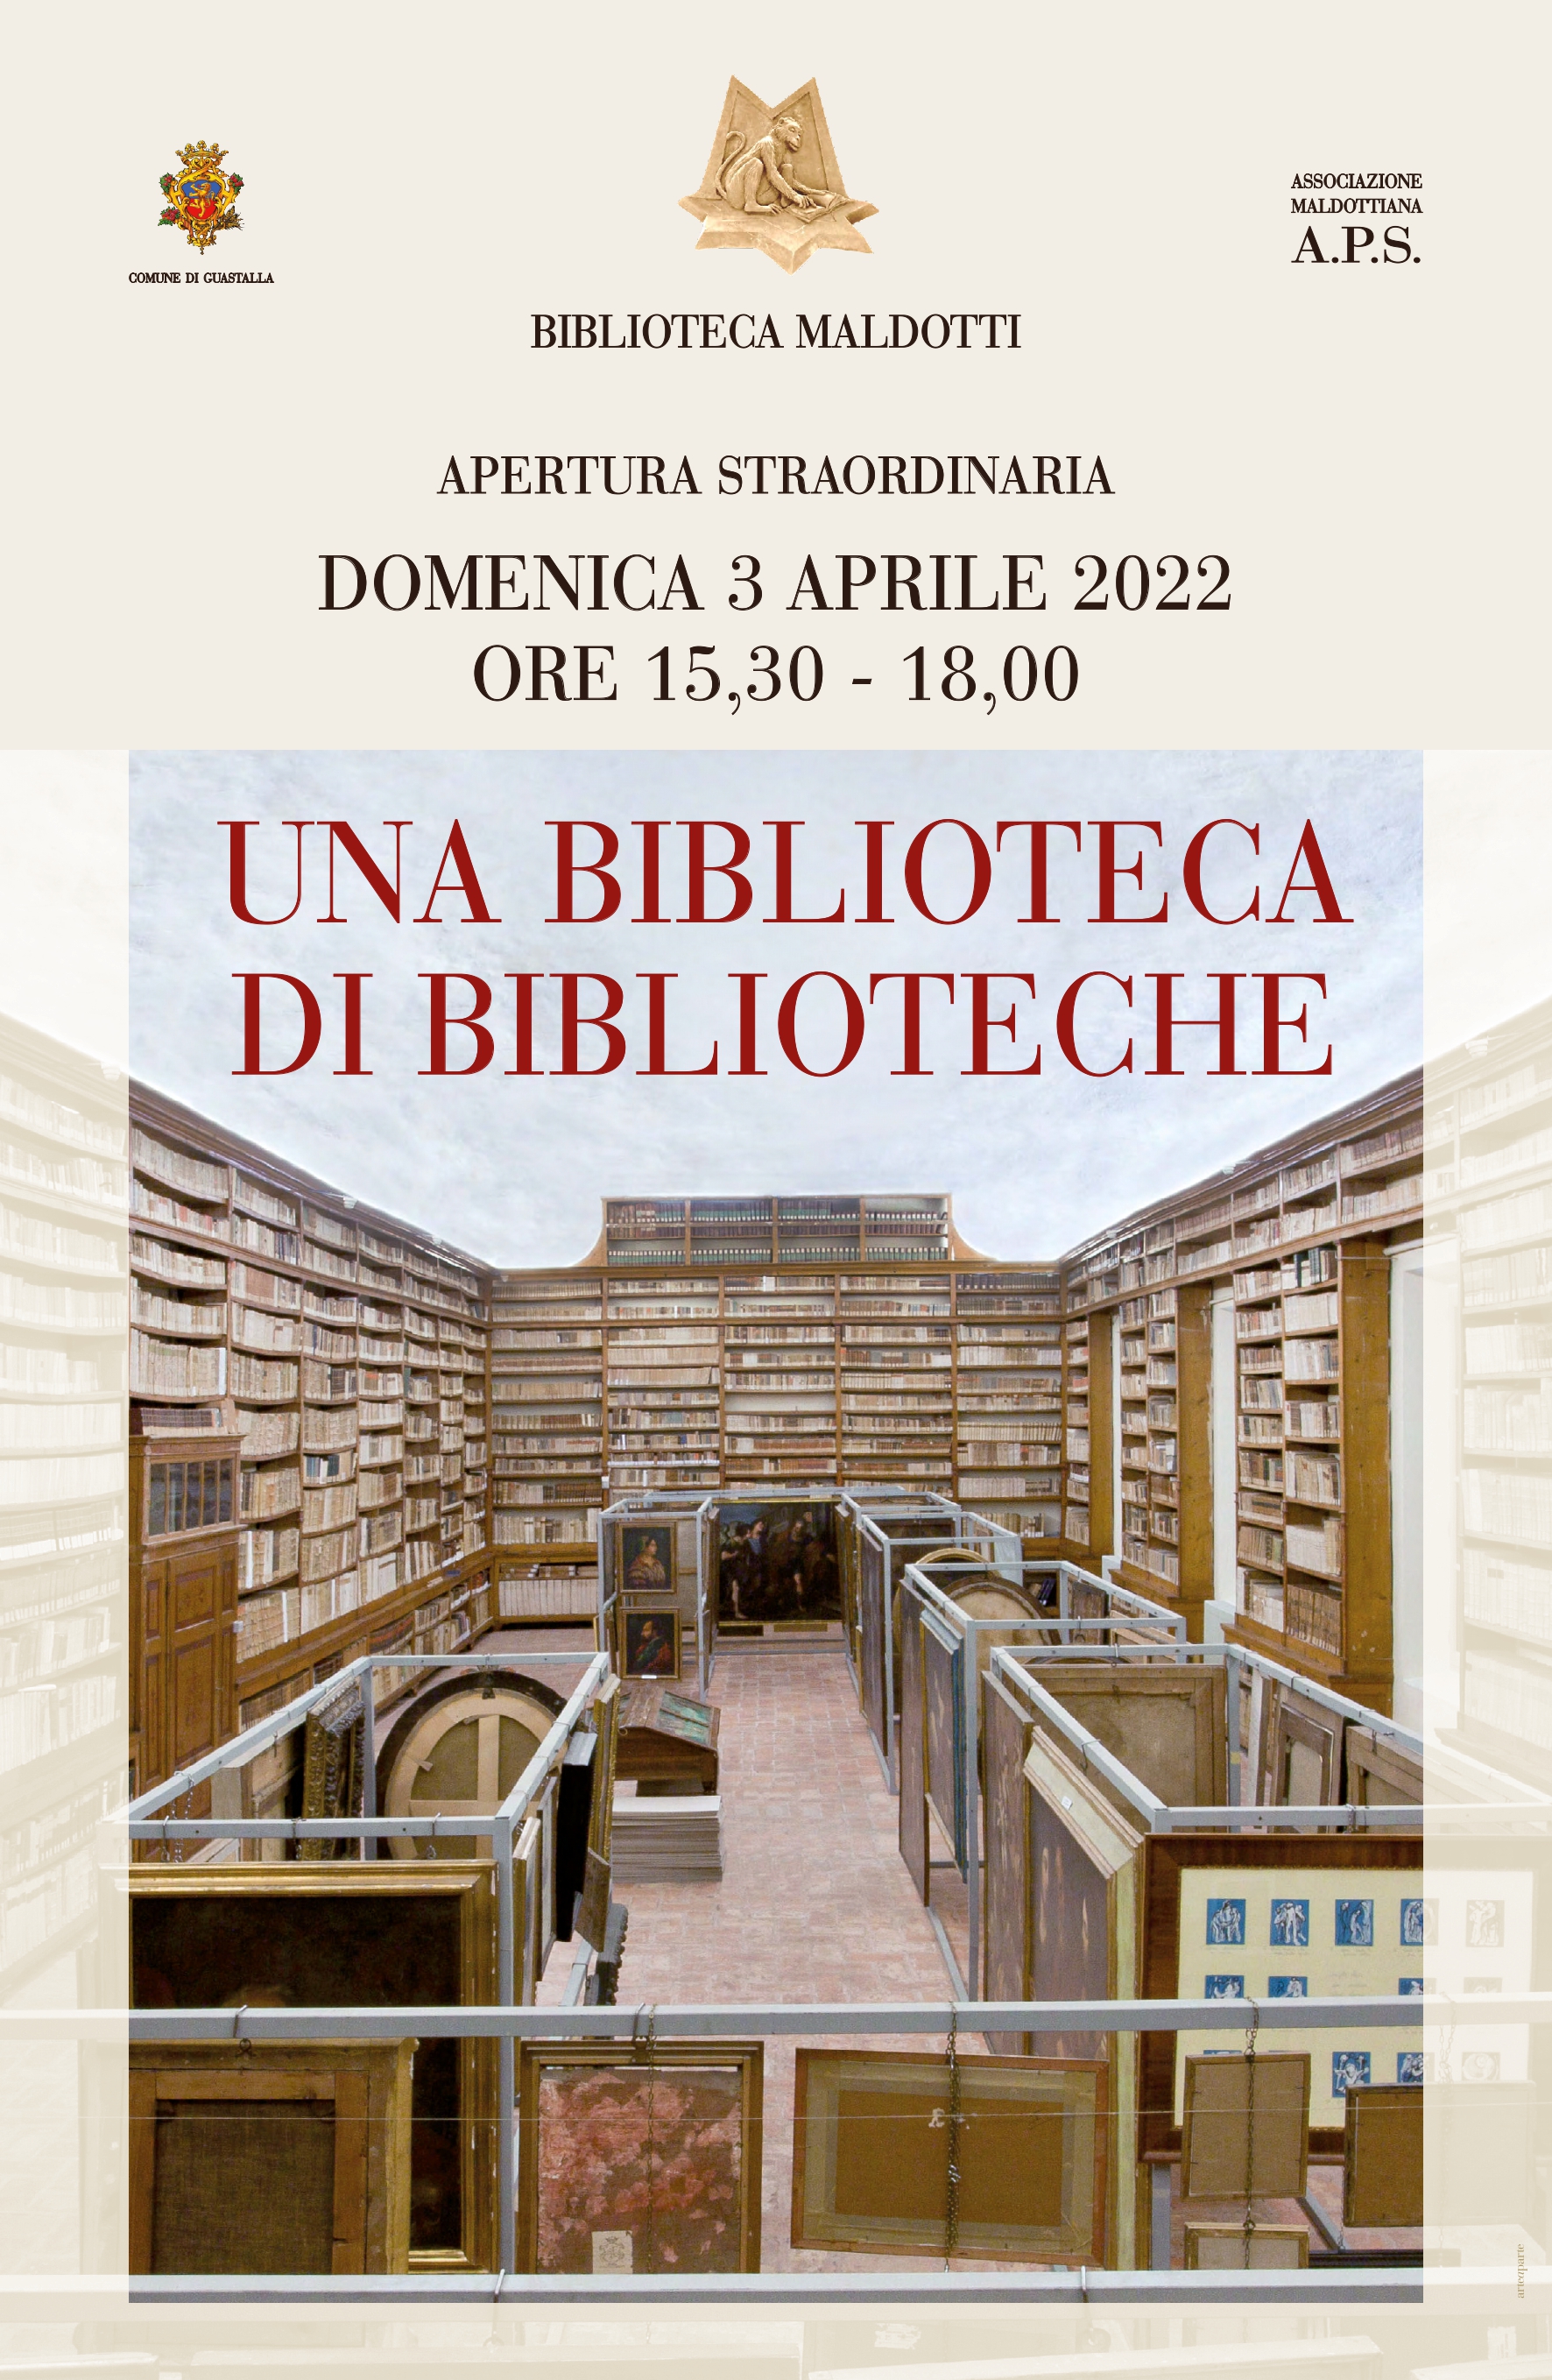 BibliotecadiBiblioteche 2725 5041